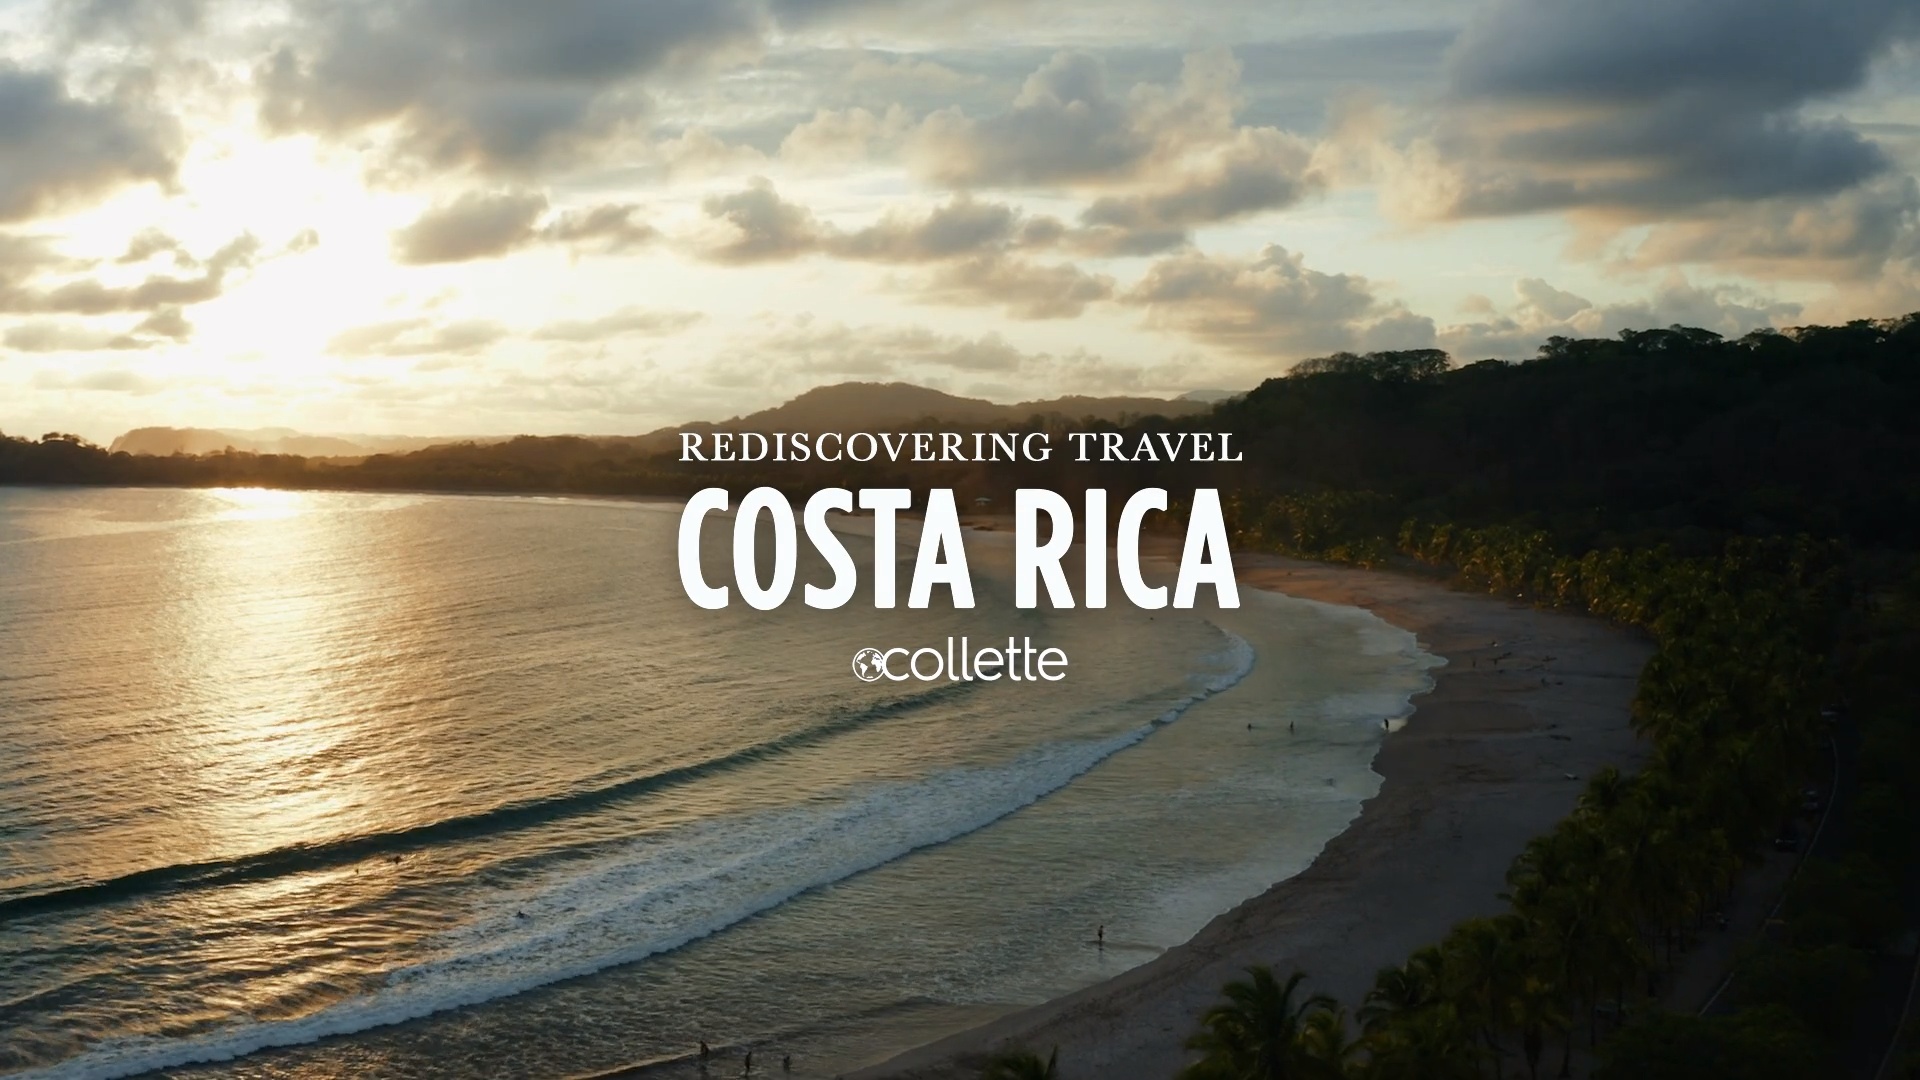 Rediscovering Travel Costa Rica Collette